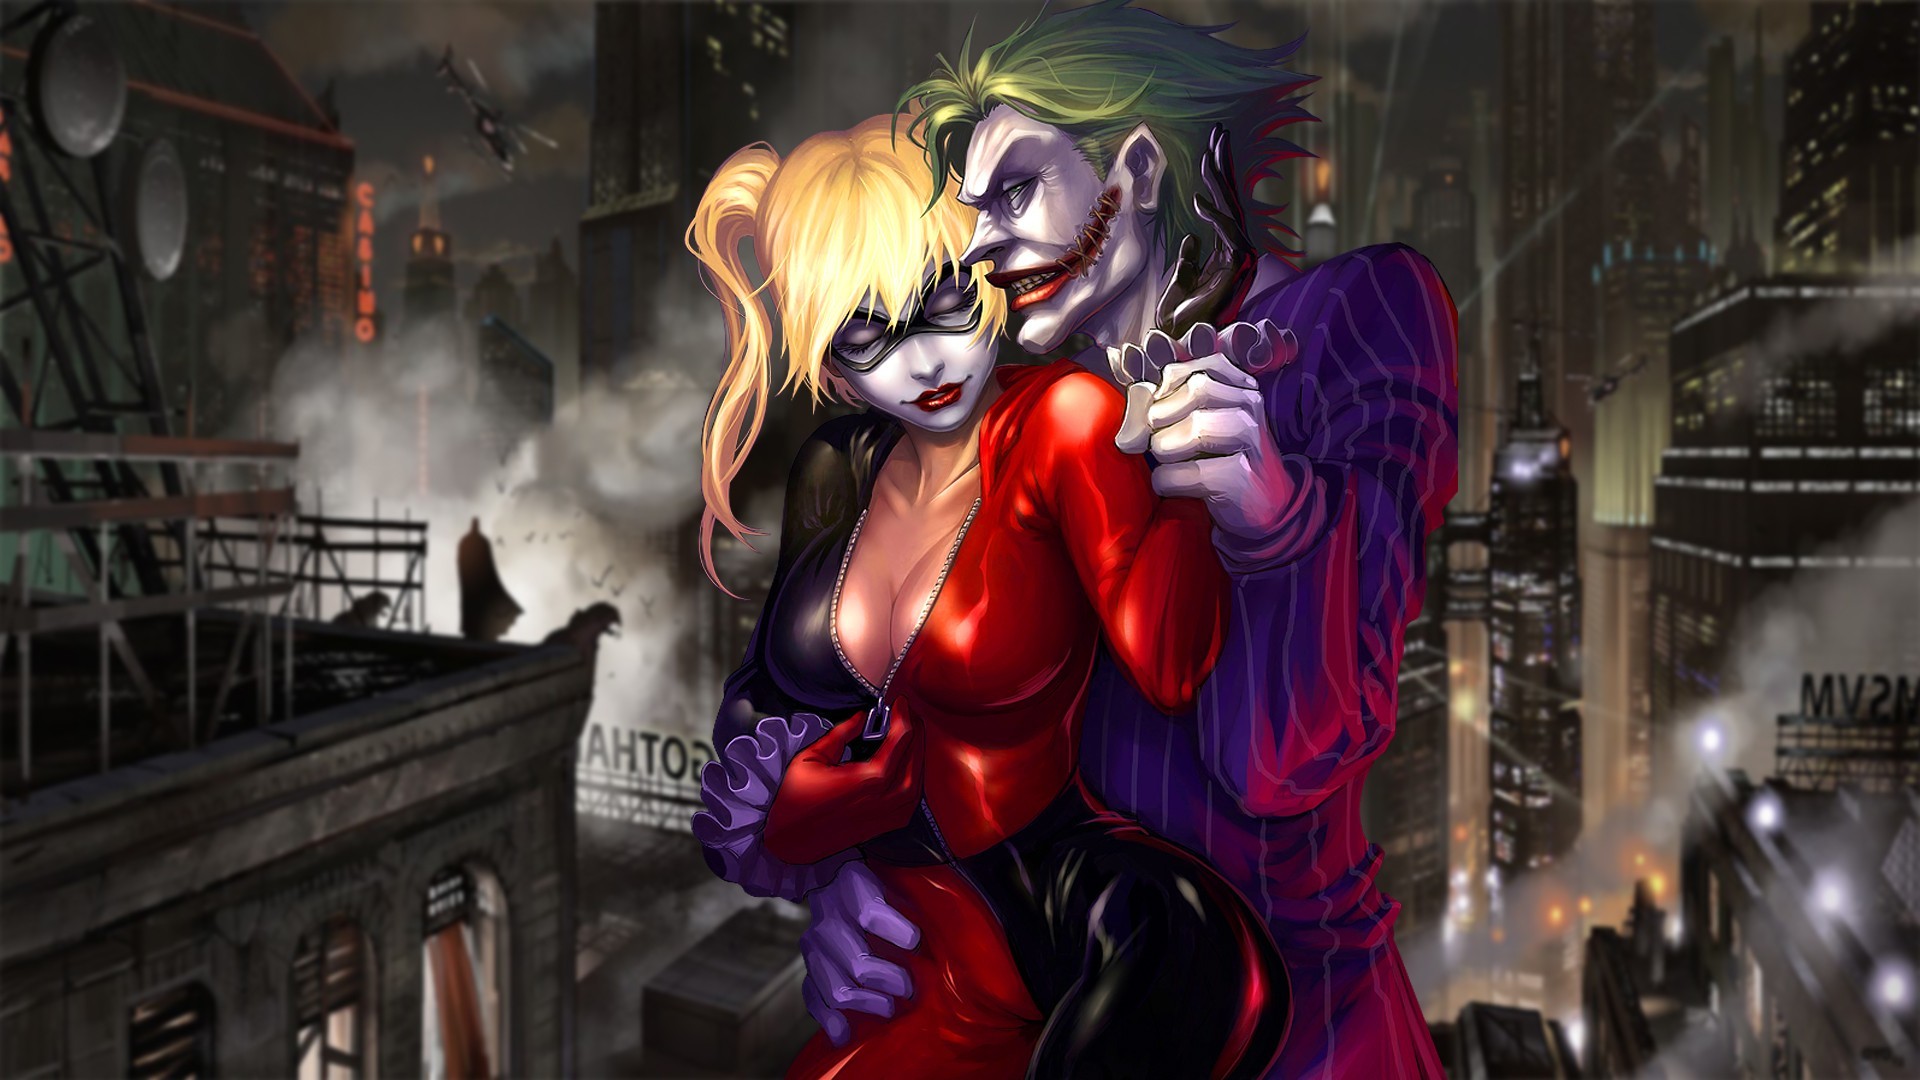 1920x1080 ...  Harley Quinn and Joker wallpaper ÃÂ·Ã¢' Download free beautiful  full